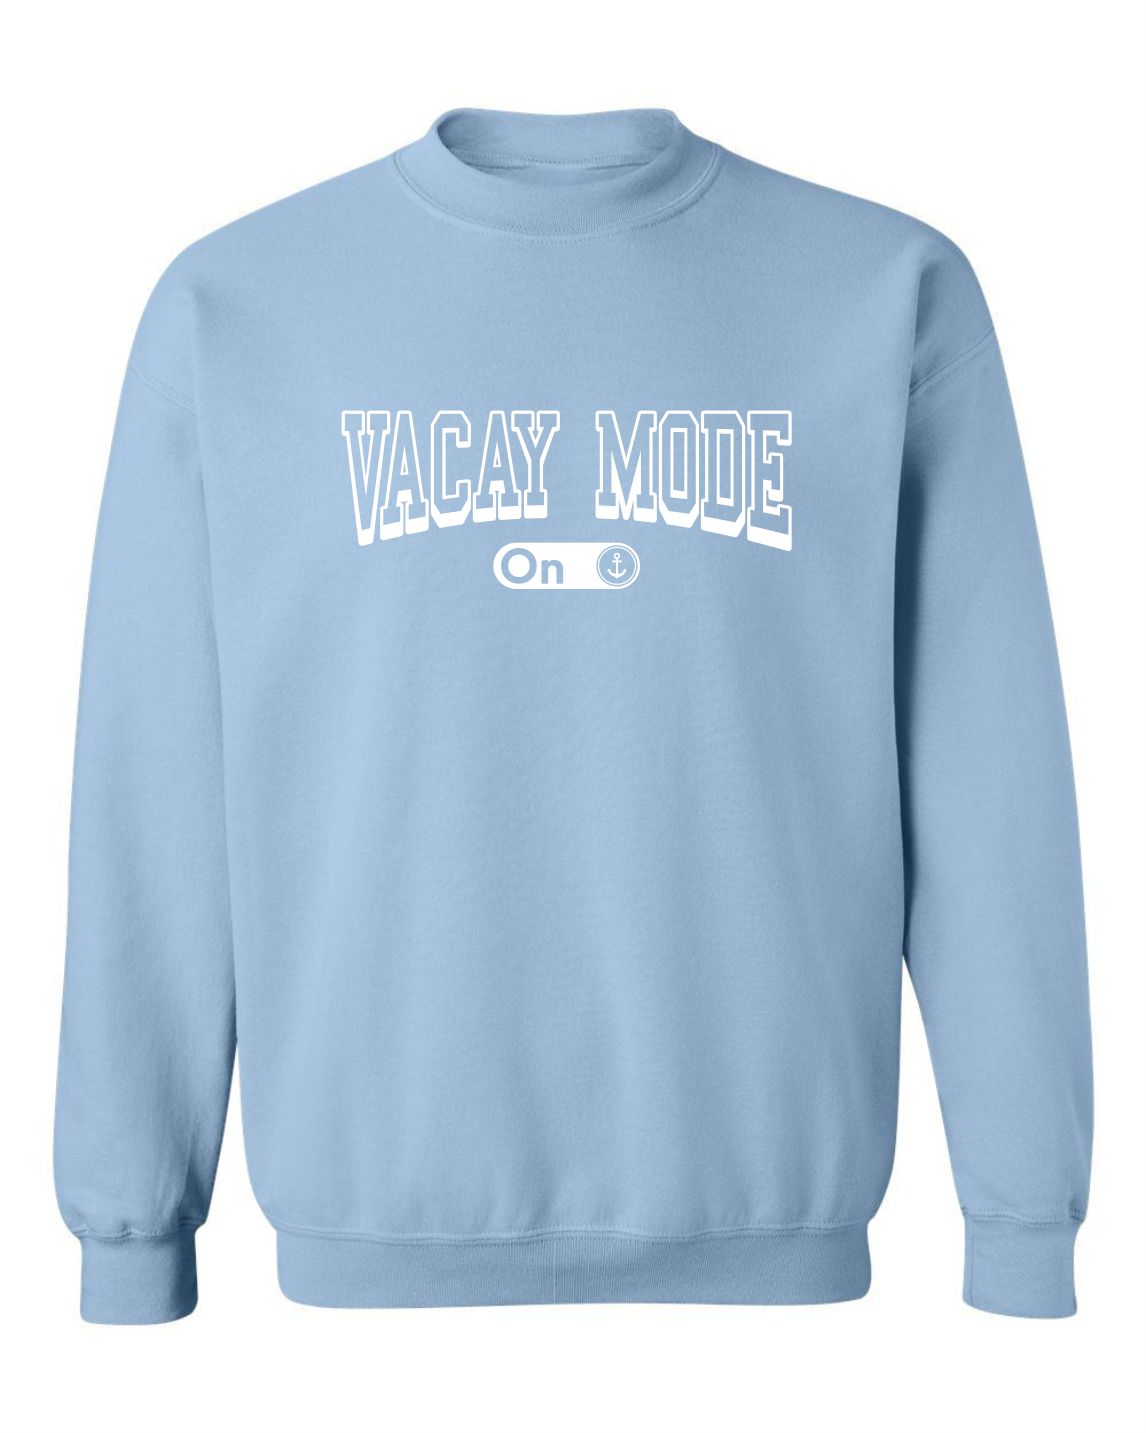 "Vacay Mode" Unisex Crewneck Sweatshirt